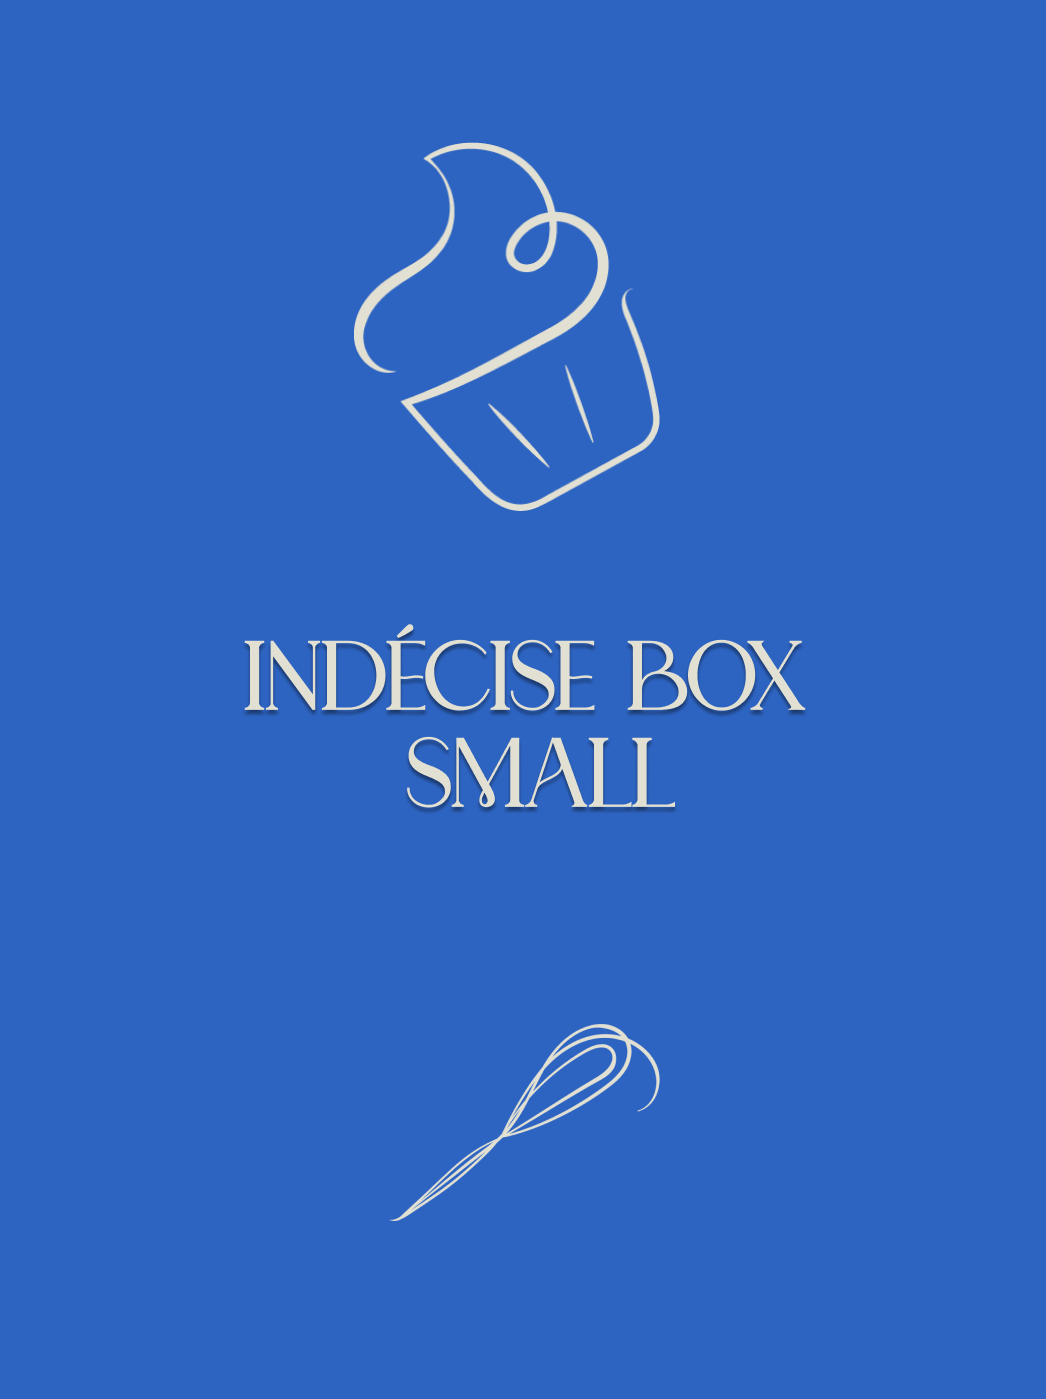 Indécise box small